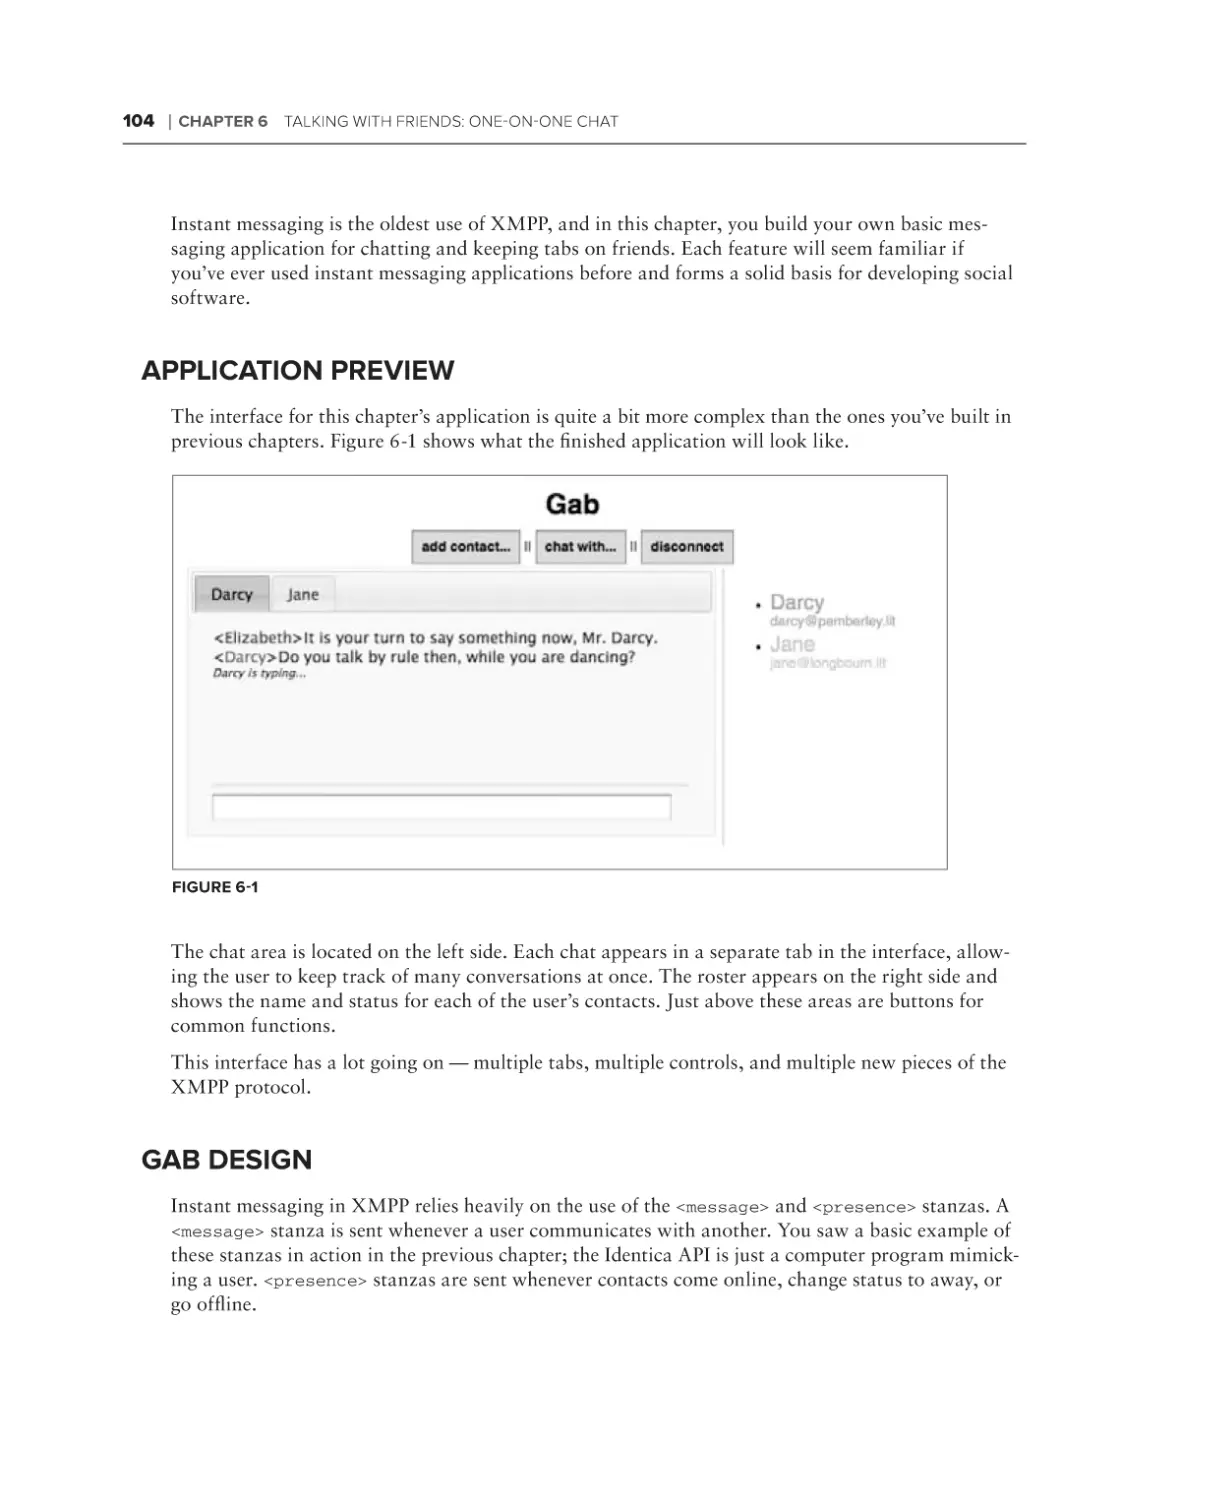 Application Preview
Gab Design